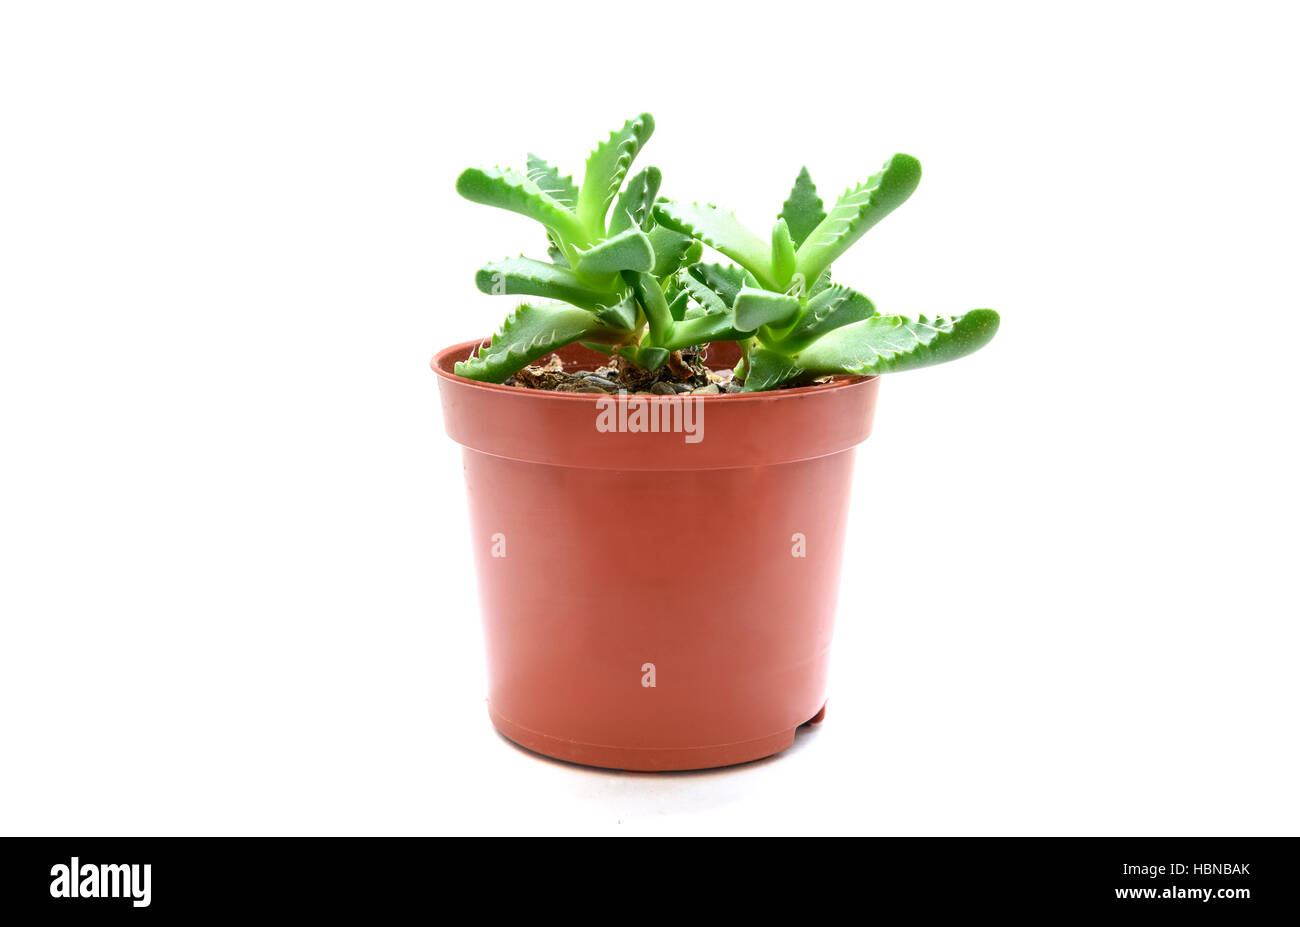 Faucaria succulent plant in flowerpot Stock Photo